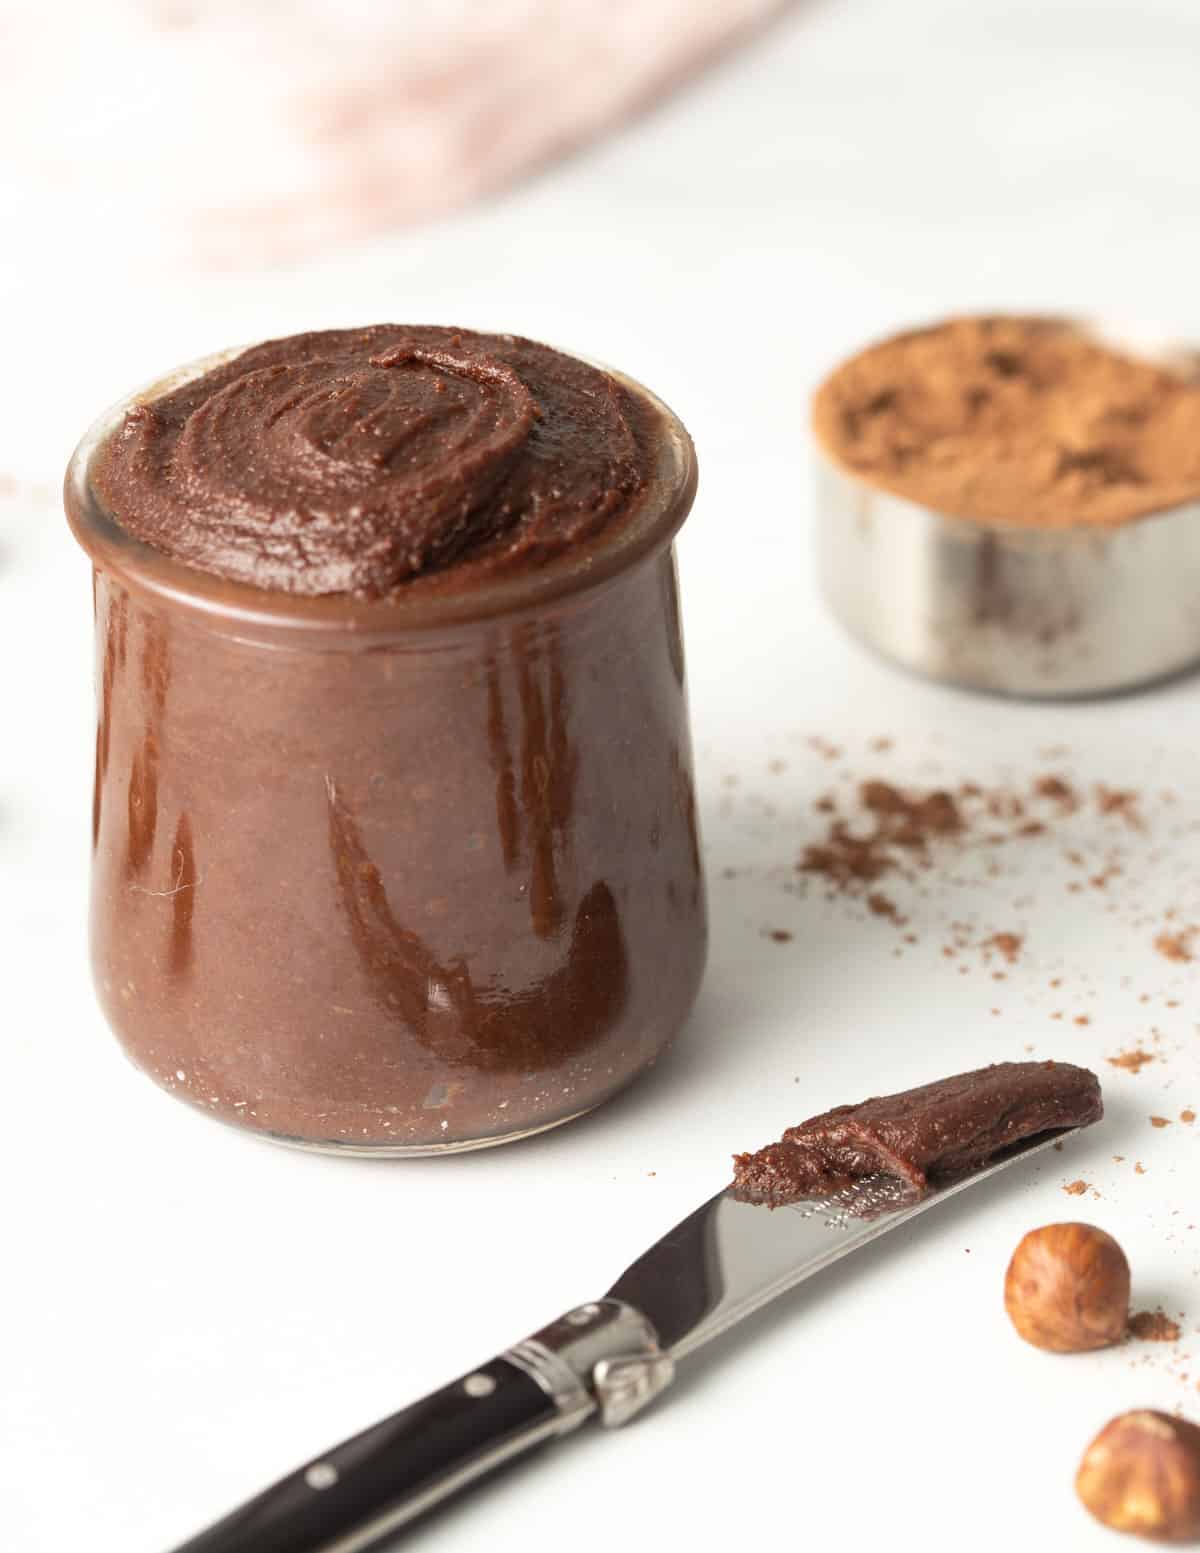 Homemade nutella spread in jar.
